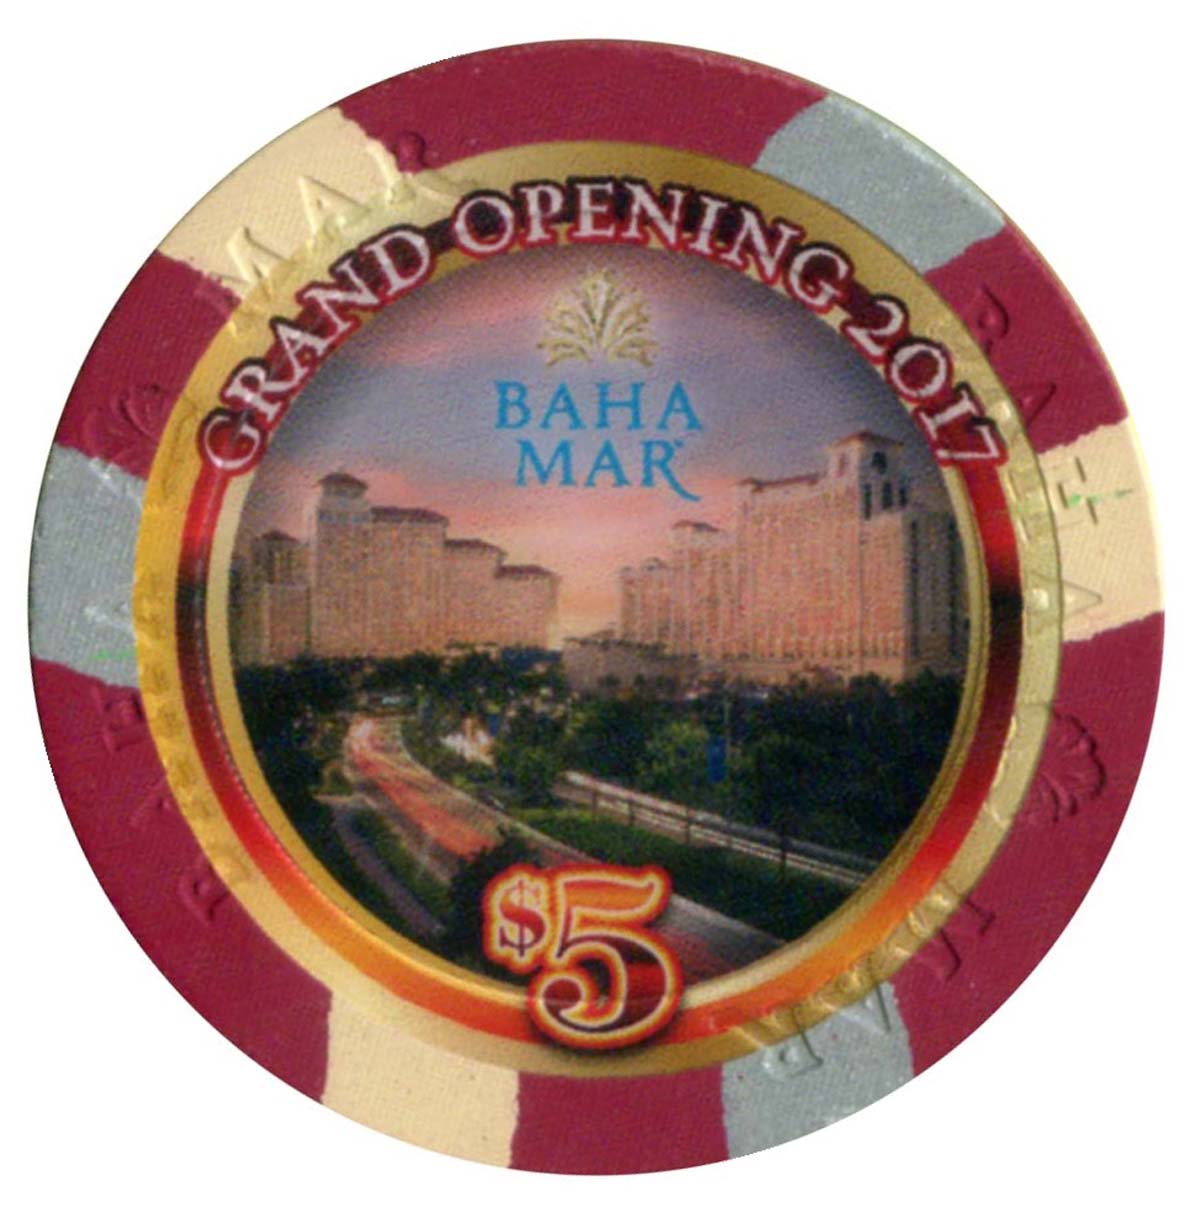 new soboba casino opening date